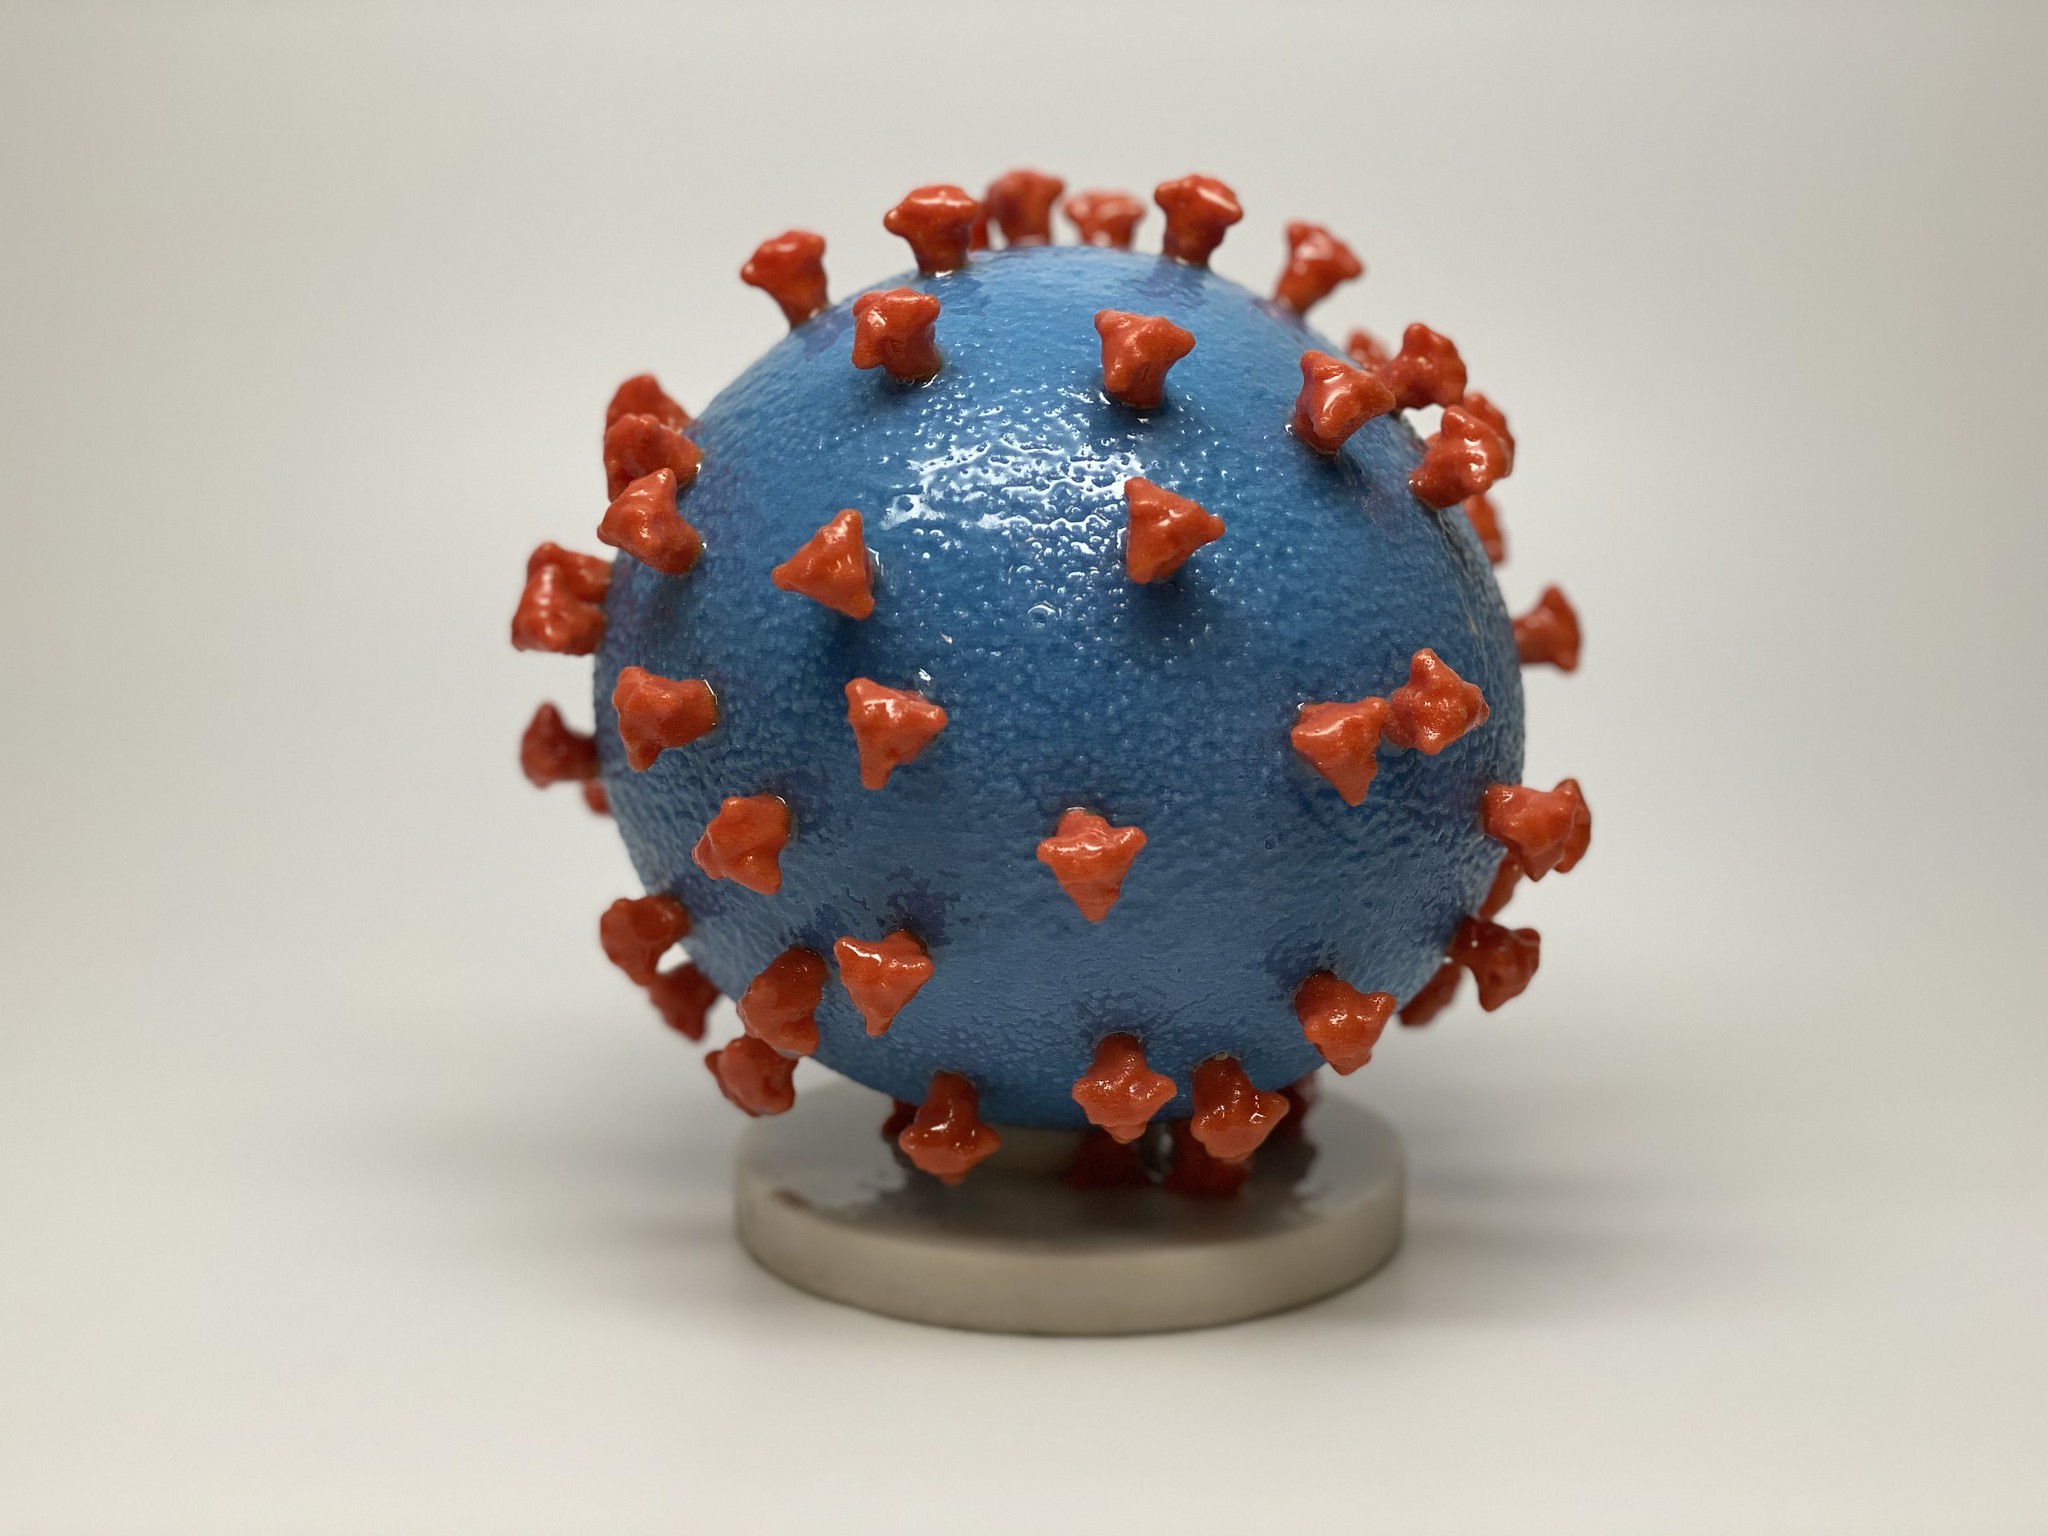 Impression 3D de la particule du virus SARS-CoV-2 / CC BY National Institute of Allergy and Infectious Diseases